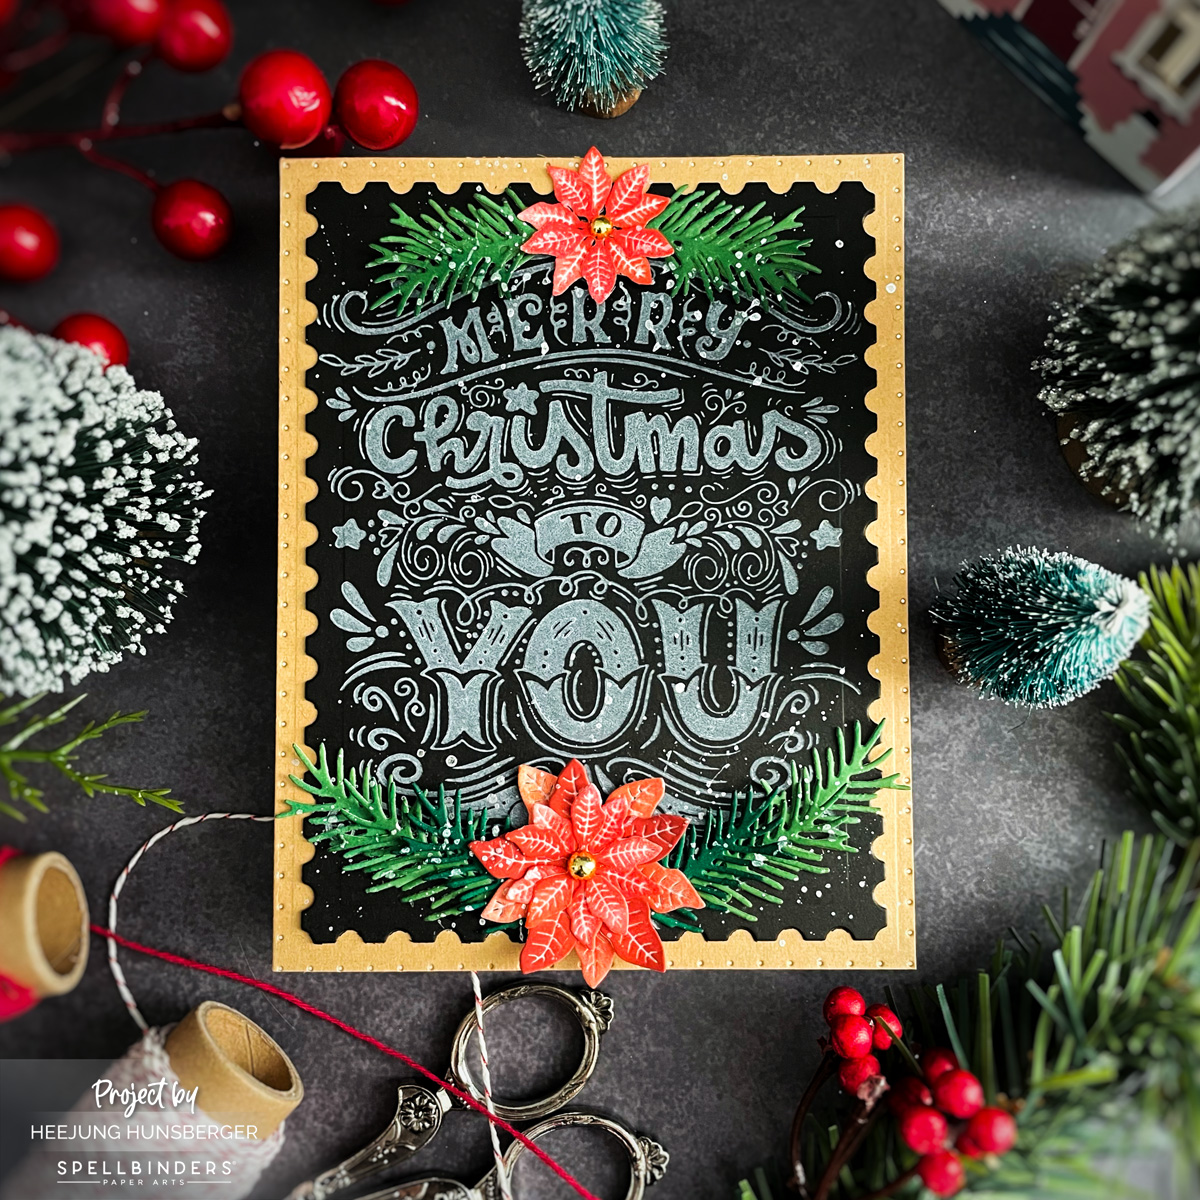 Spellbinders -Merry Christmas To You Card